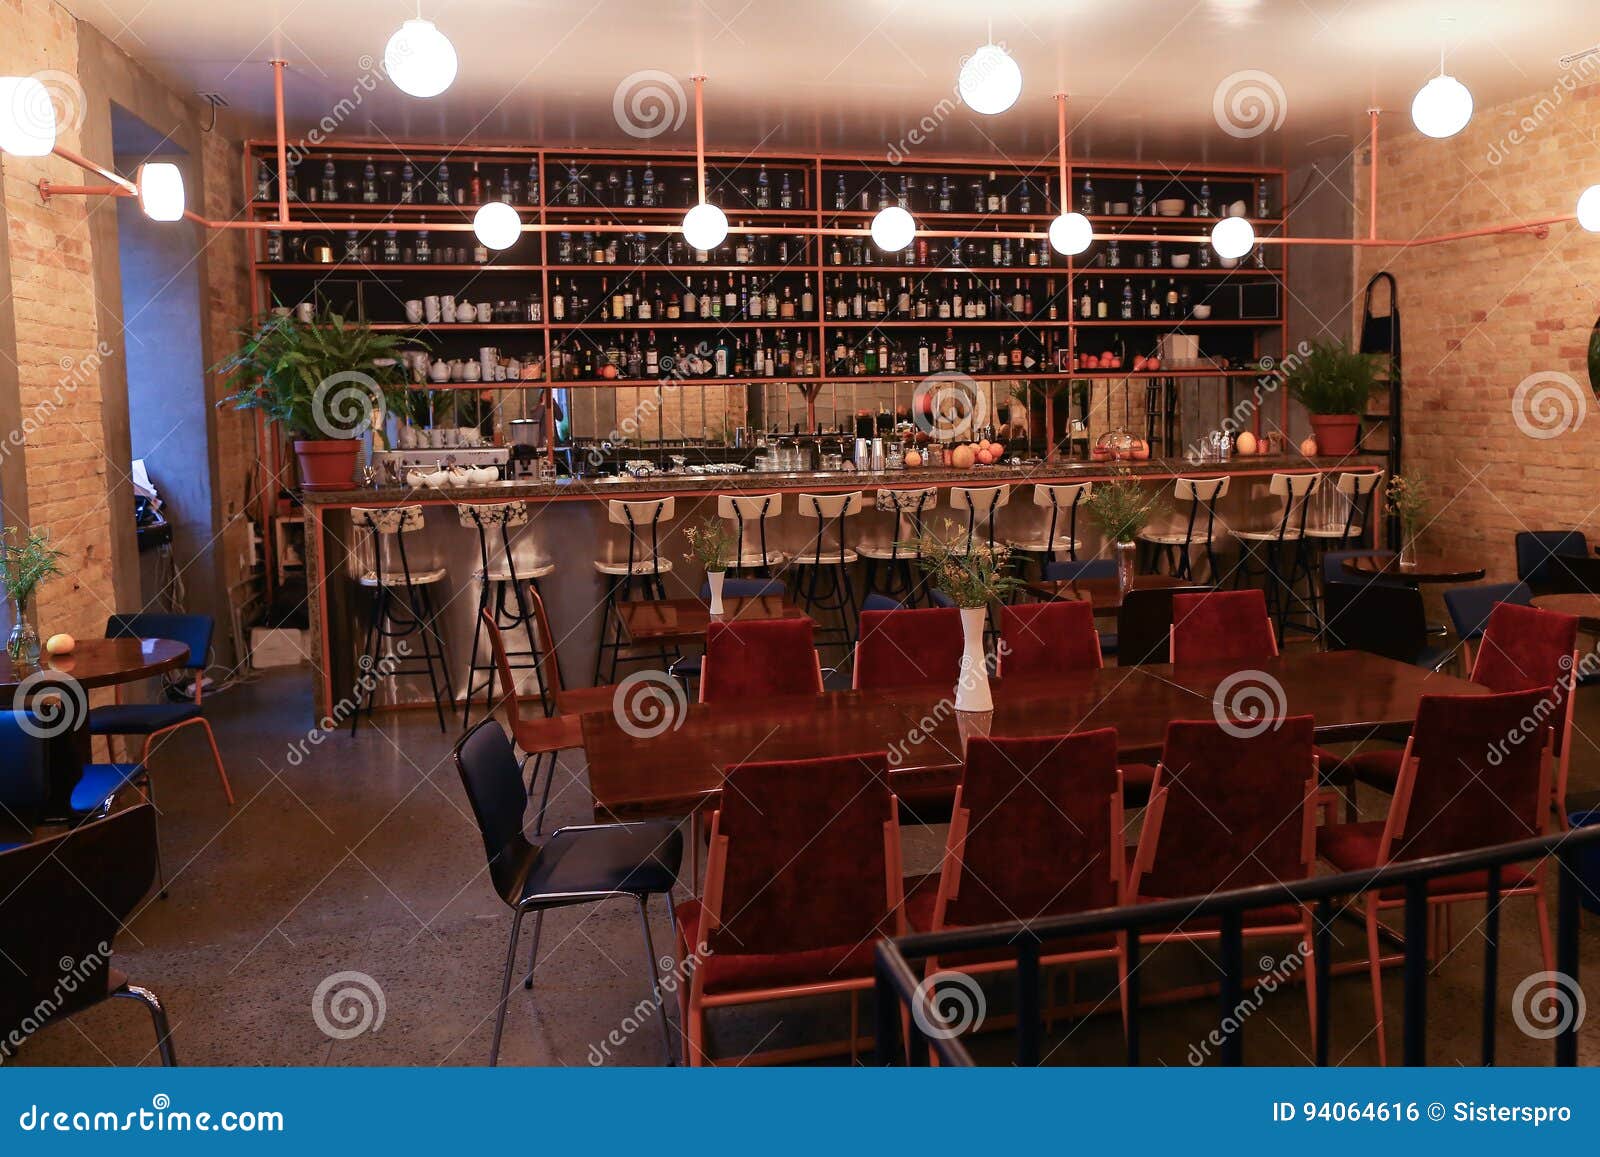 Capture Design Ideas Trendy Cafe Or Restaurant Because Bar